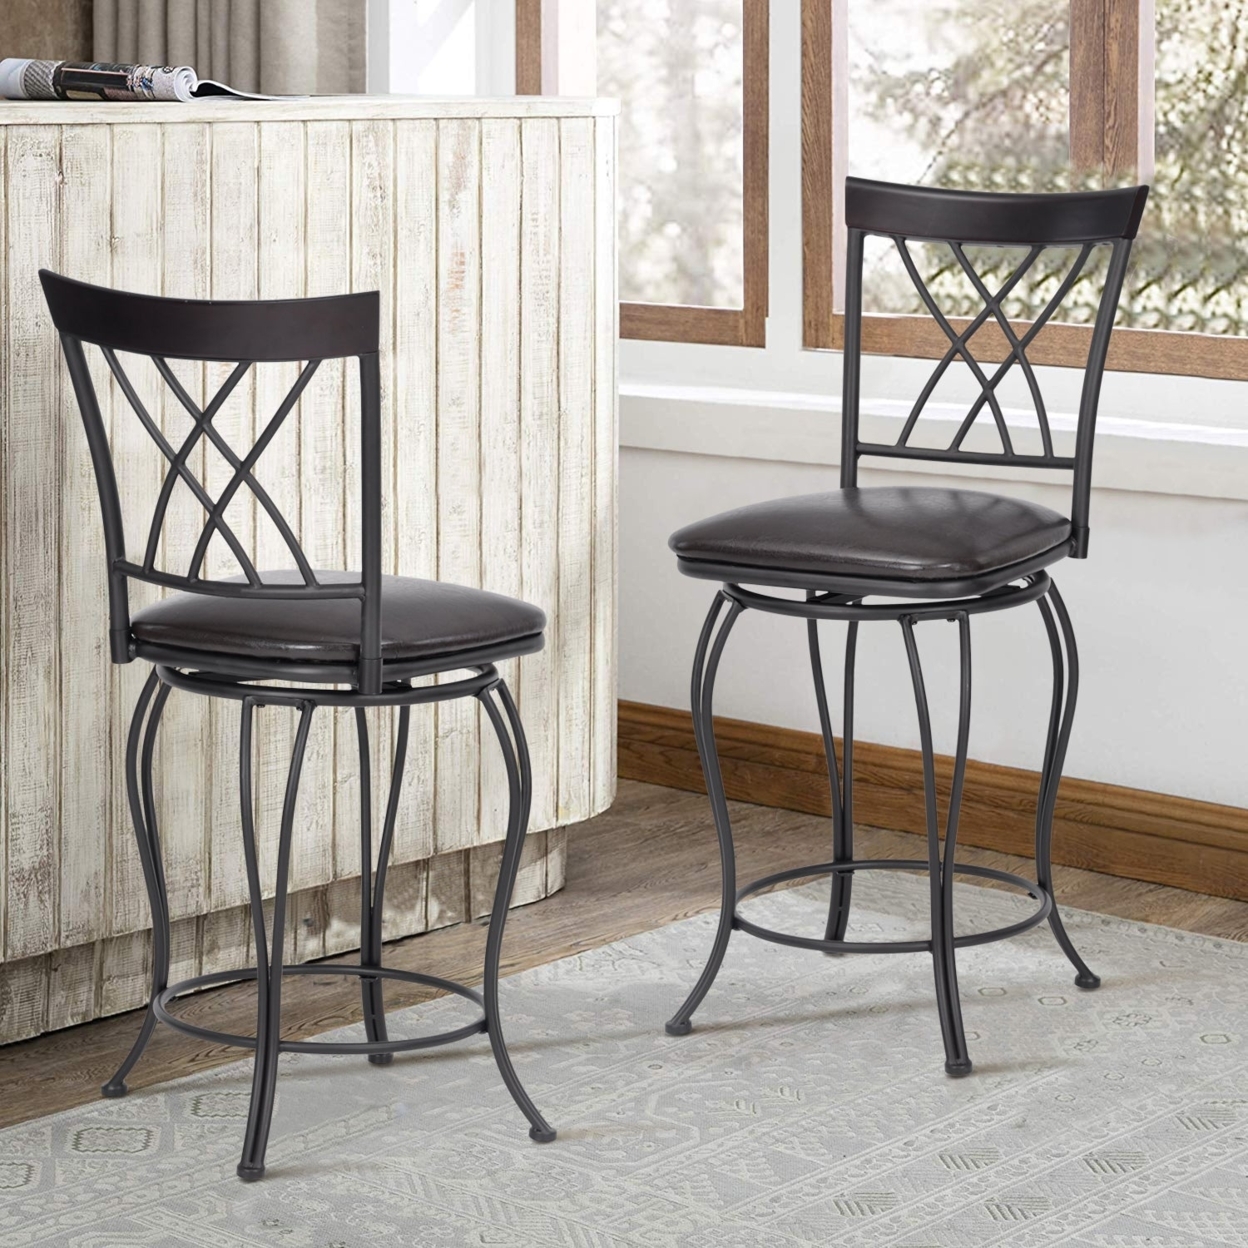 Dining Bar stool Black Easy Assemble Kitchen Bar Chairs, Set of 2, X-Shape Back - Bar Stool